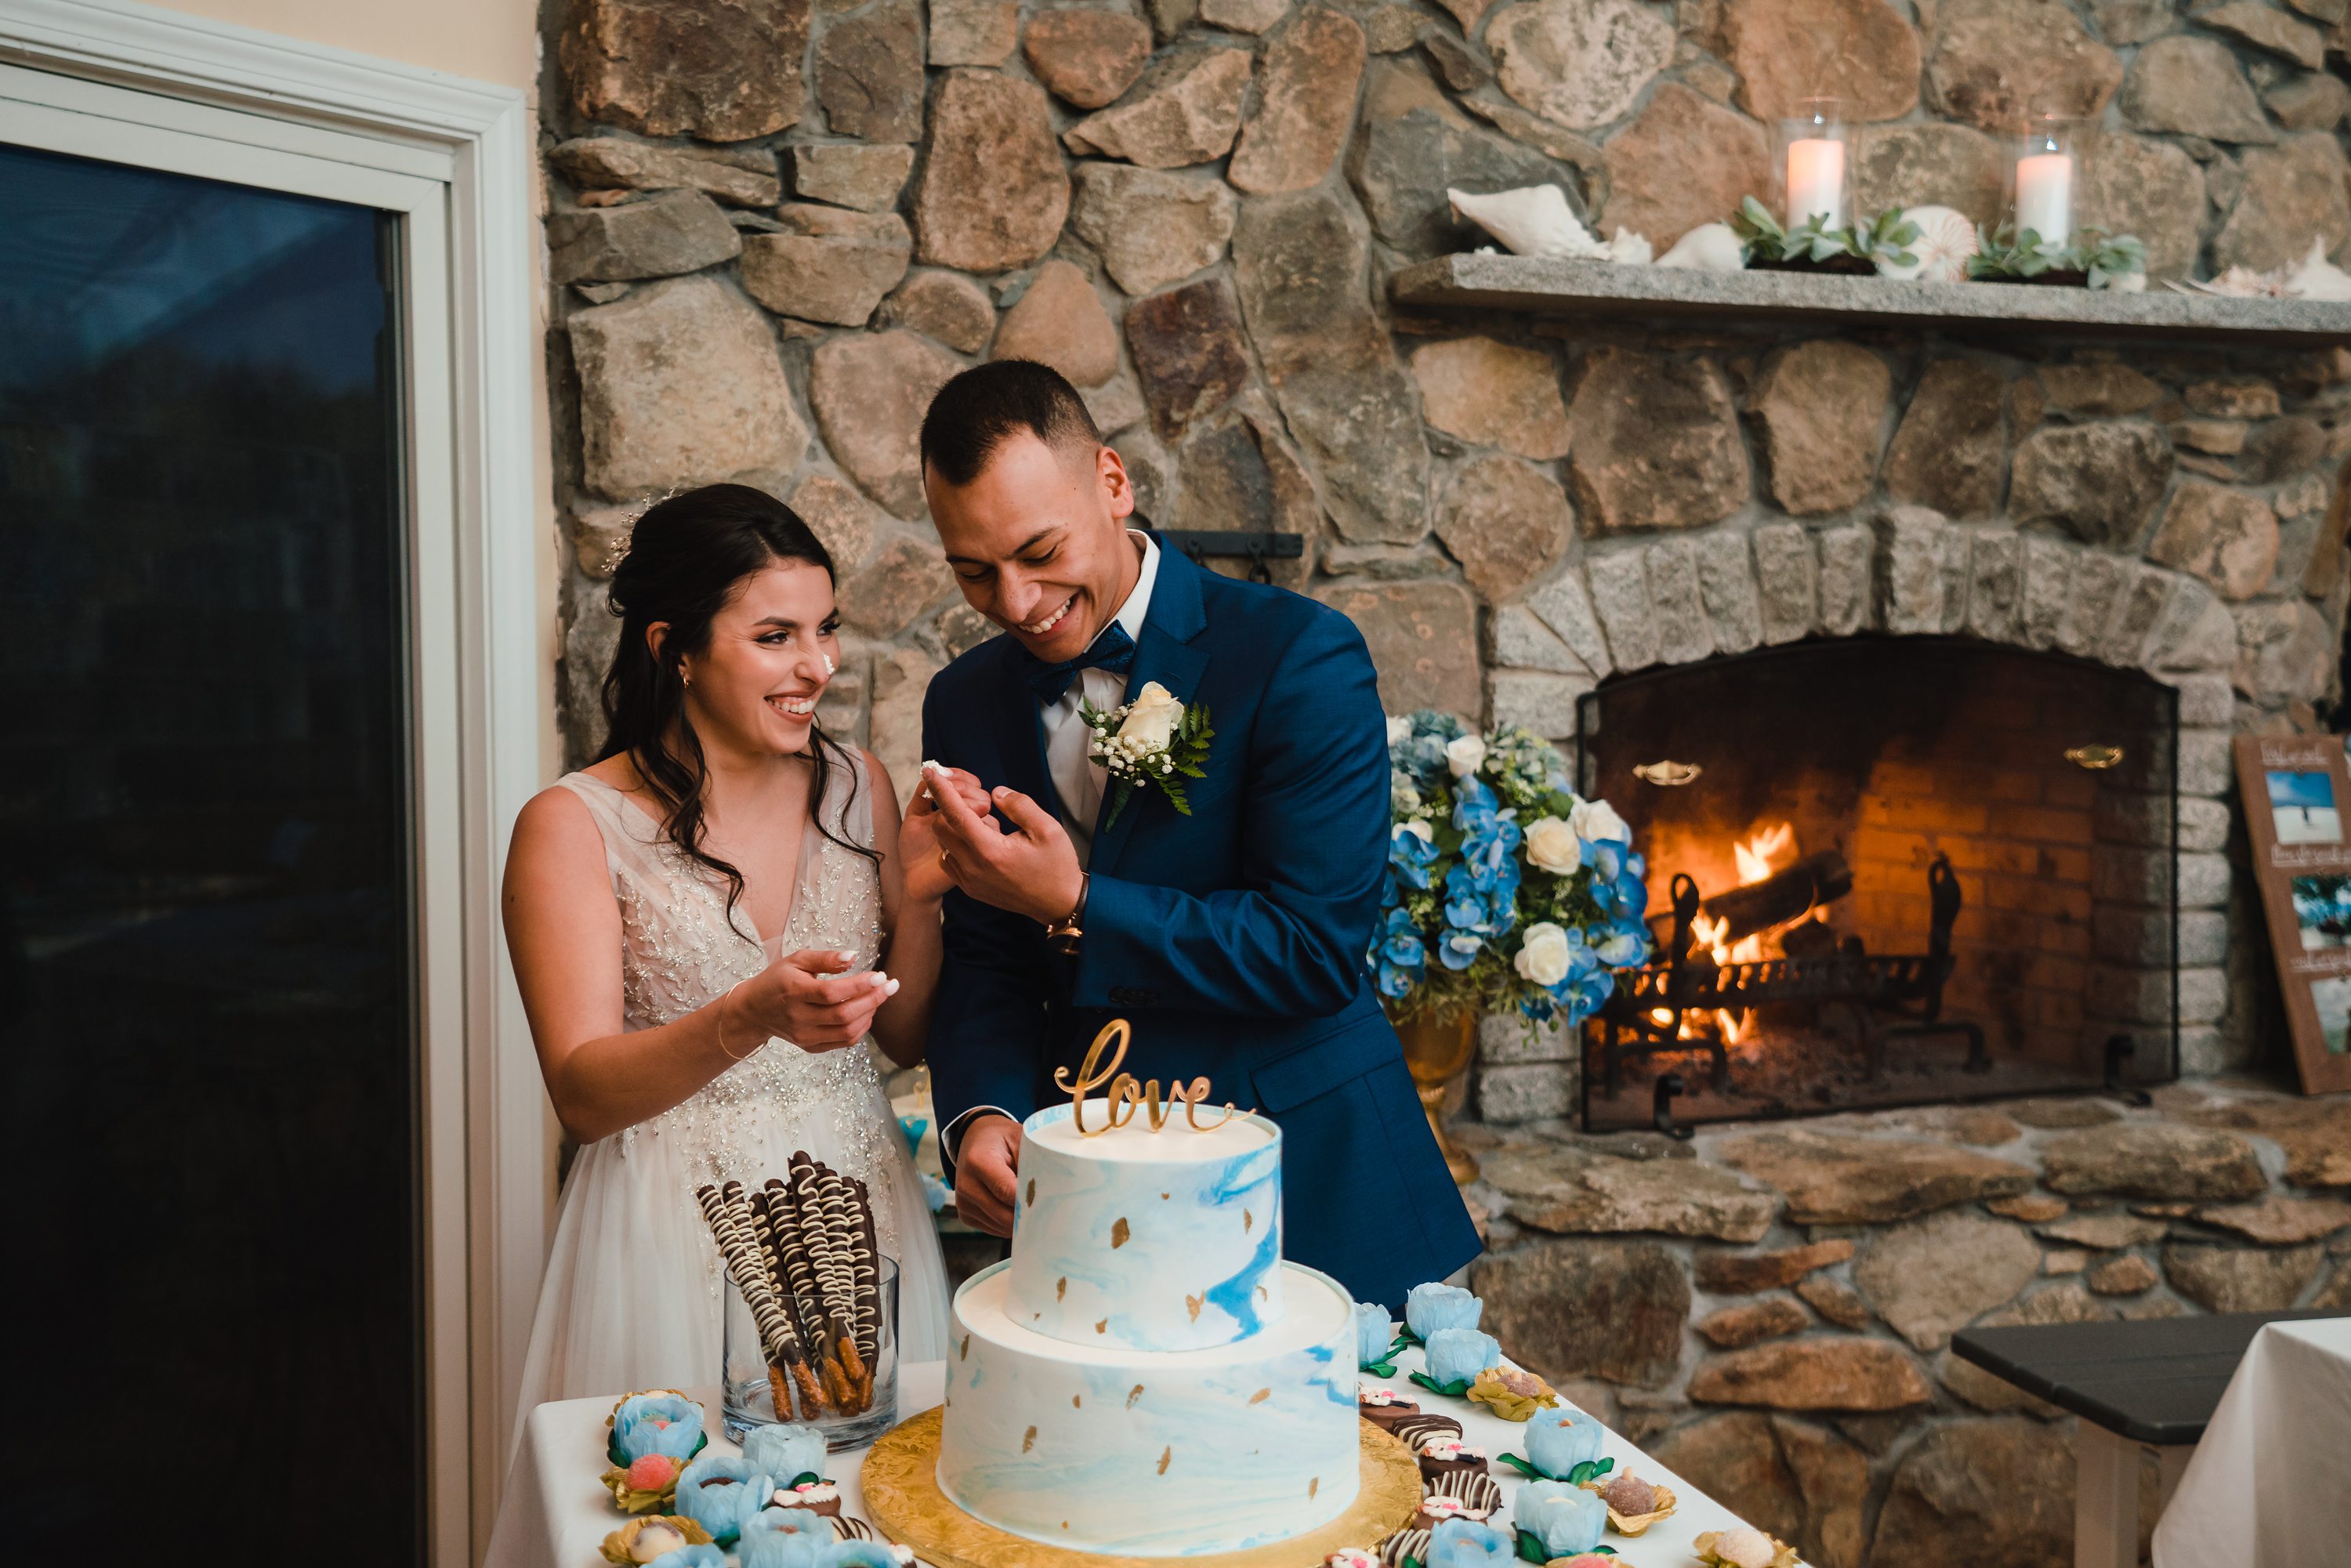 Boston wedding photographer,Sony wedding photographer,cake cutting